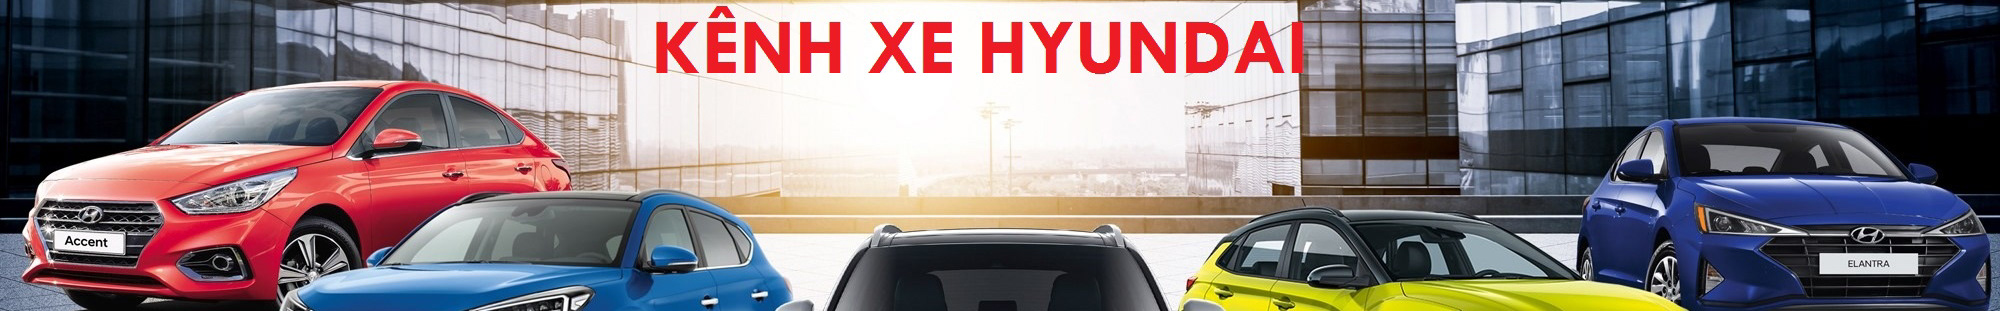 Kênh xe Hyundai's profile banner